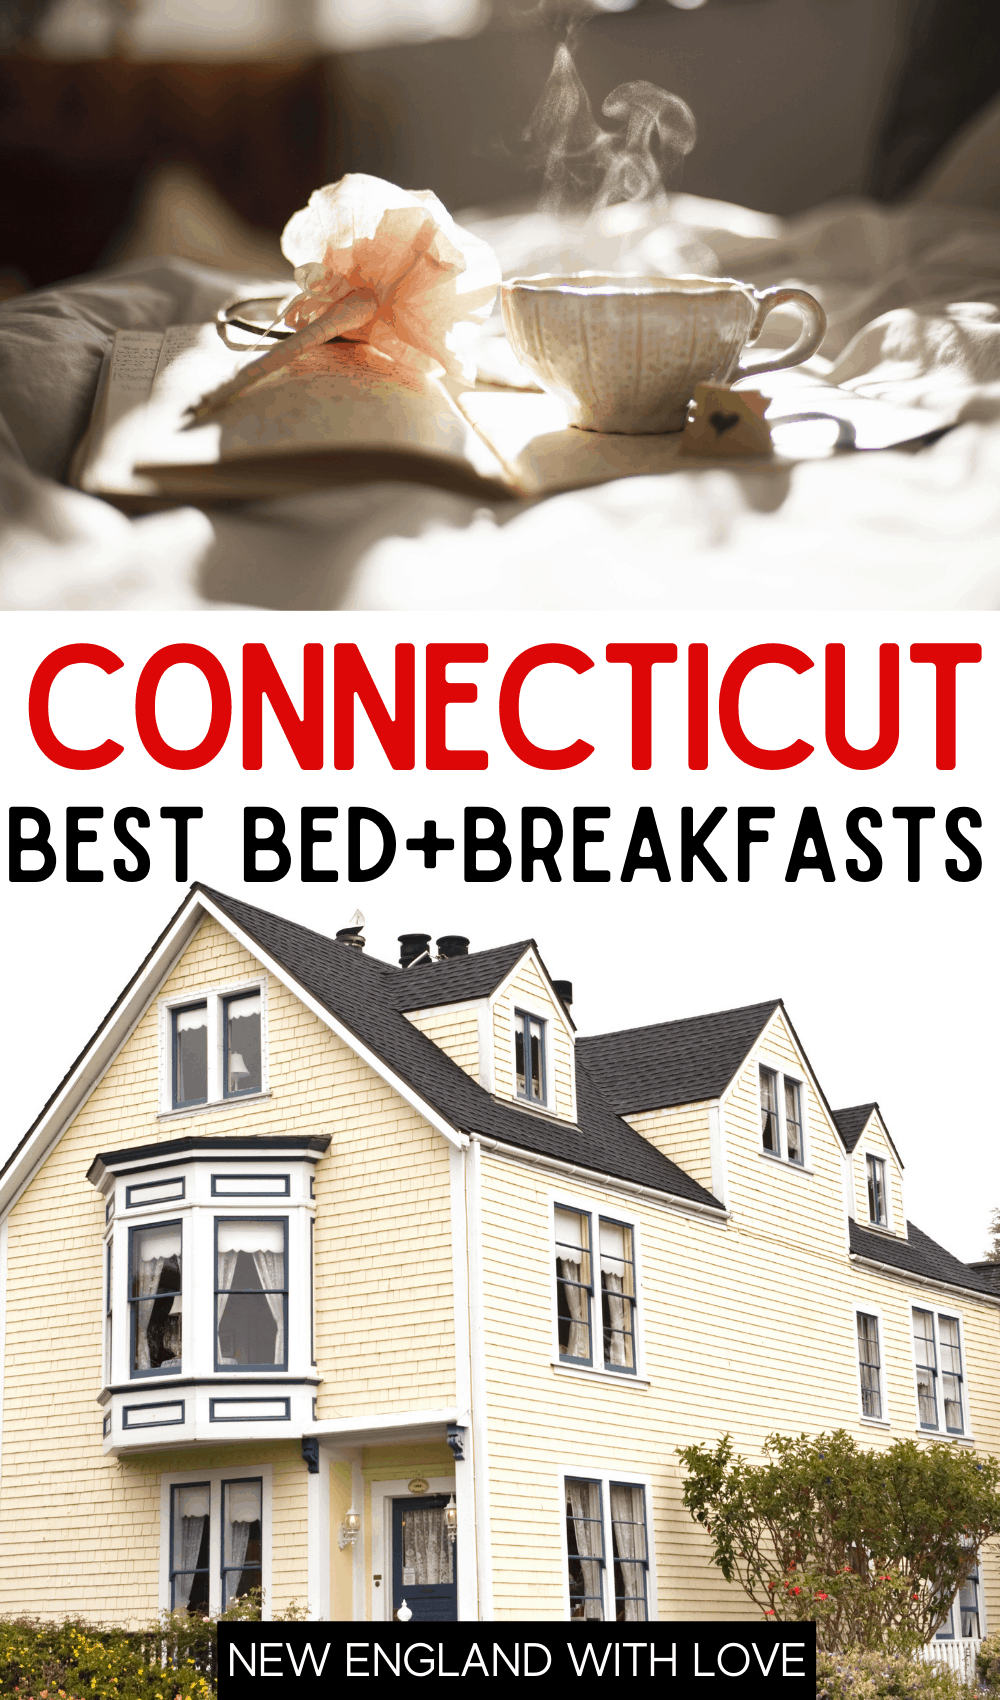 Pinterest graphic "CONNECTICUT BEST BED & BREAKFASTS"